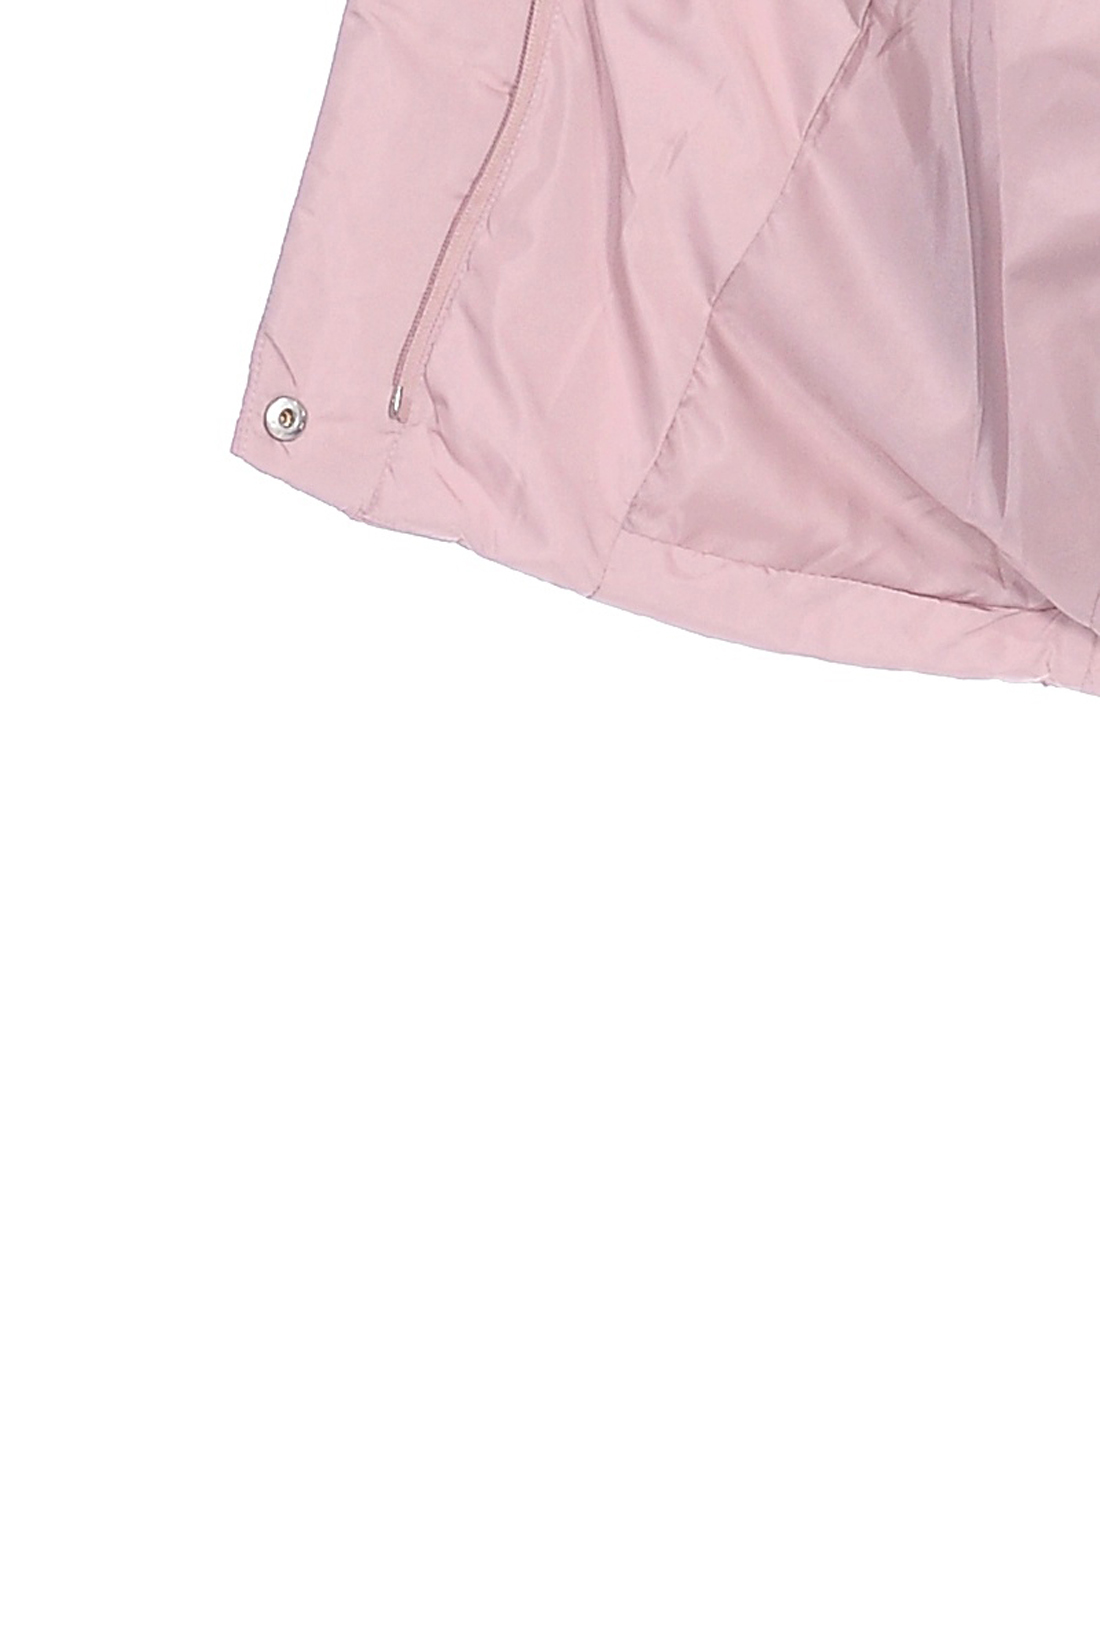 Жилет с асимметричной застёжкой (арт. baon B159001), размер XL, цвет розовый Жилет с асимметричной застёжкой (арт. baon B159001) - фото 2